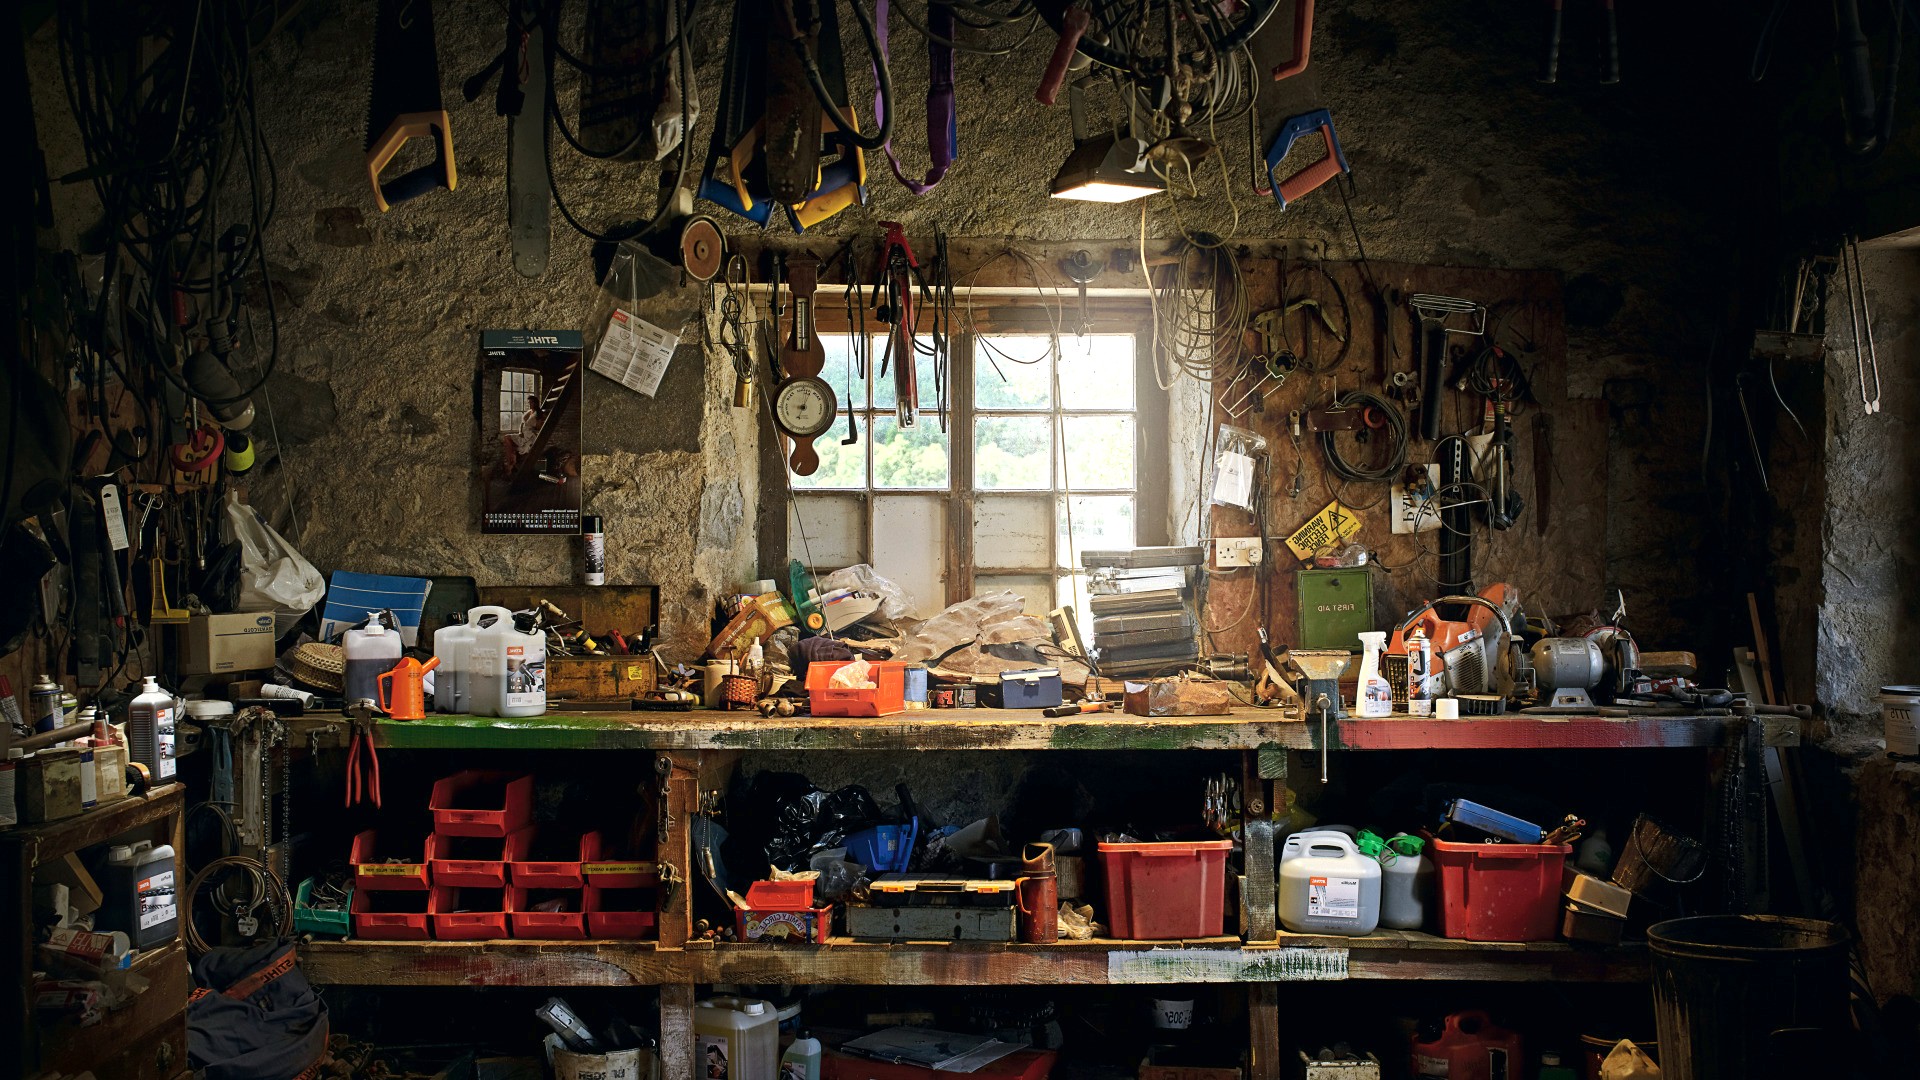 picture: tools, window, workshop (image)